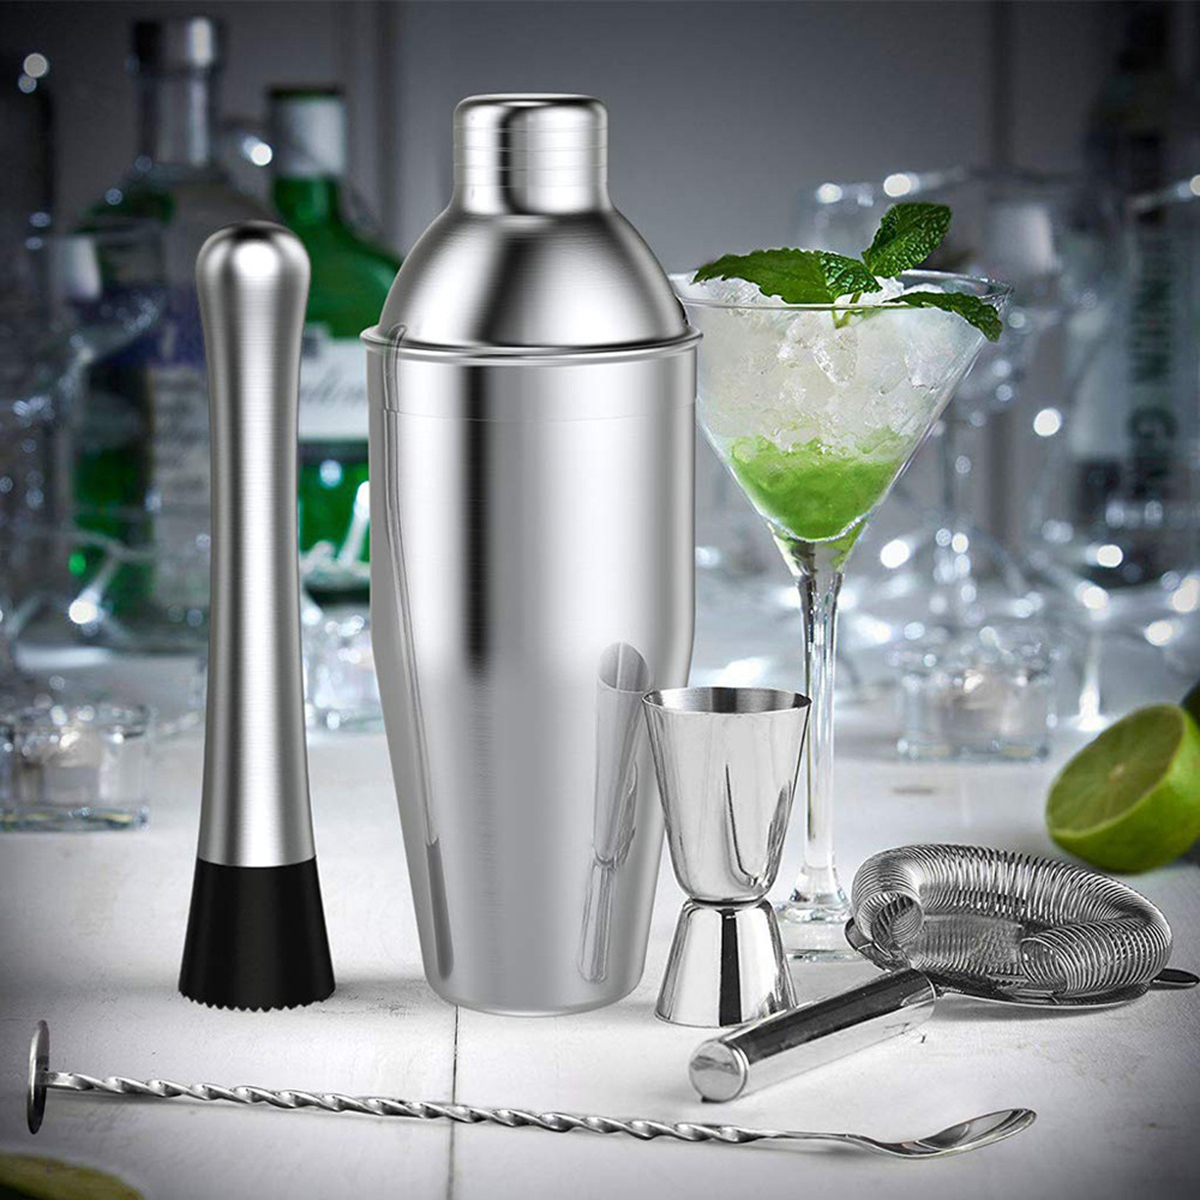 14Pcs-Stainless-Steel-Cocktail-Shaker-Set-Bar-Mixer-Drink-Bartender-Tool-Home-1728110-5